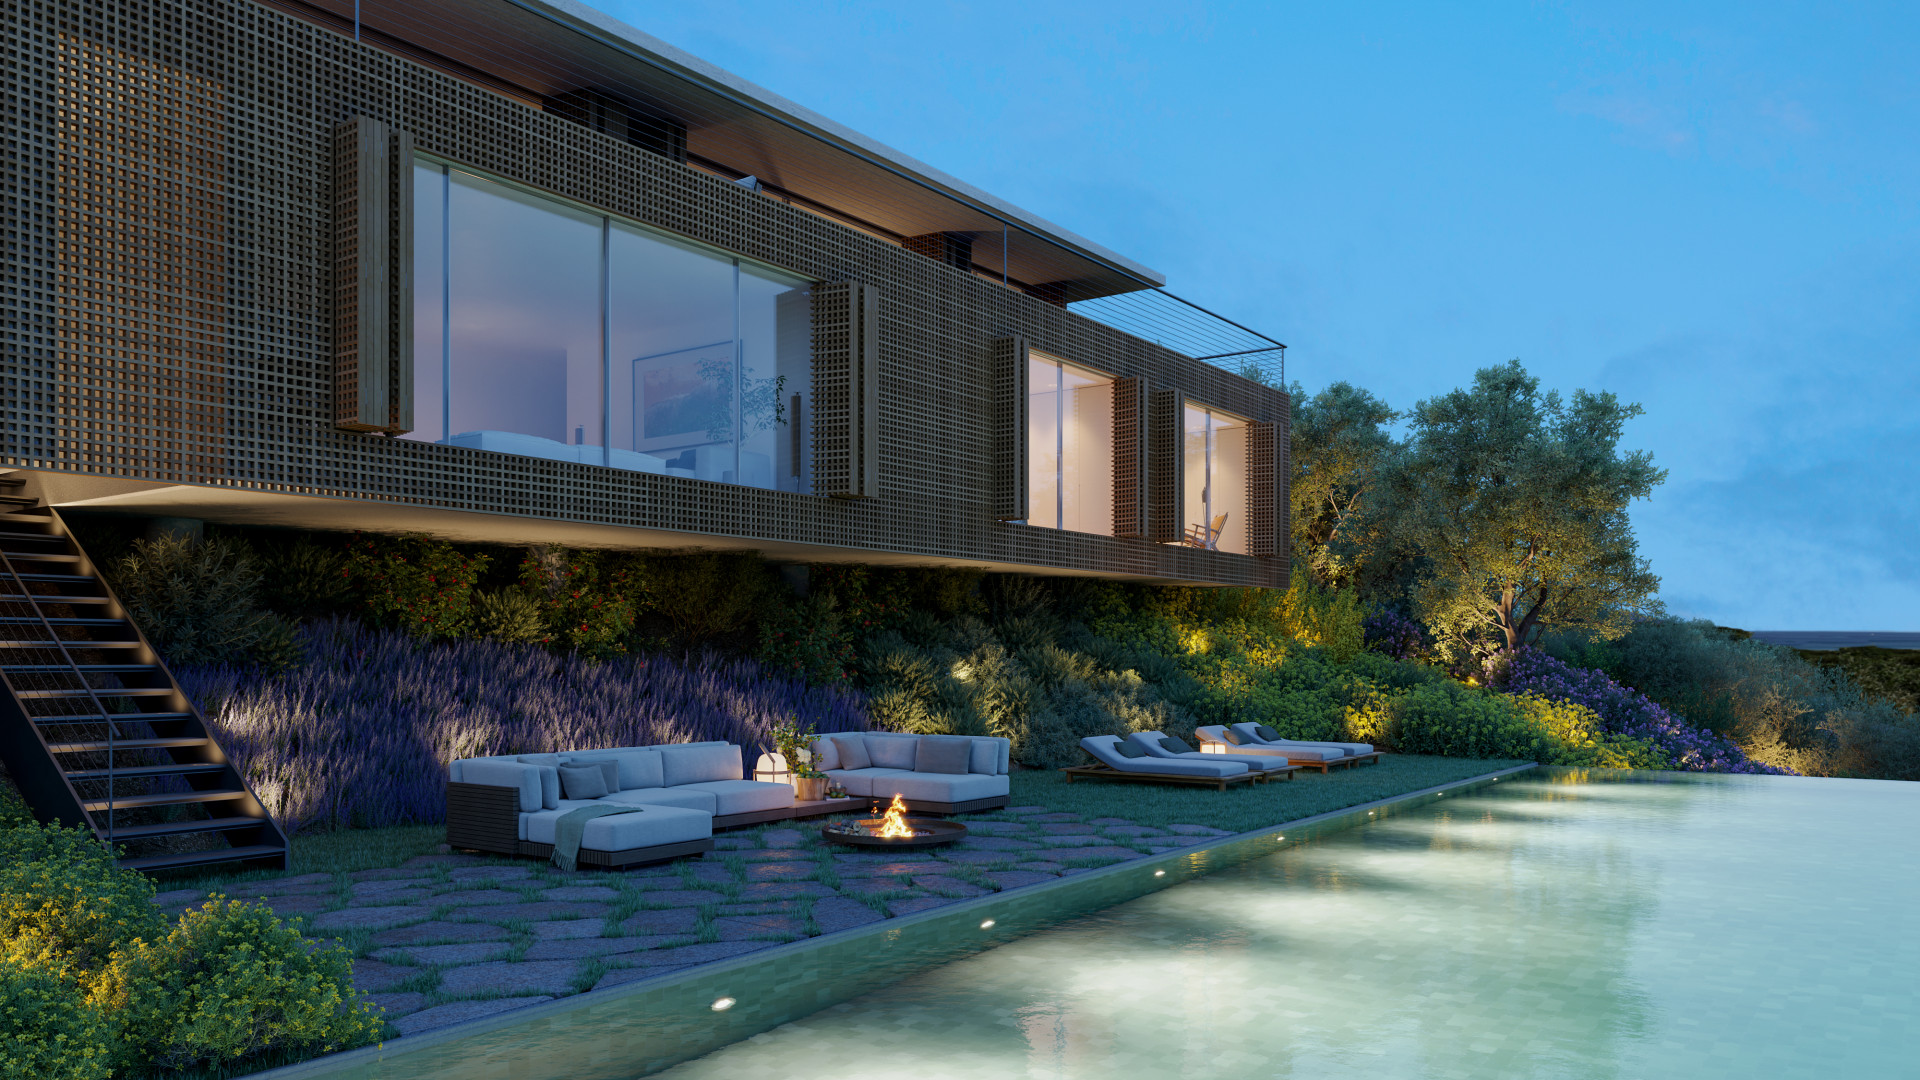 6 highly exclusive villas at Finca Cortesin, designed by award winning architect Marcio Kogan. in Casares